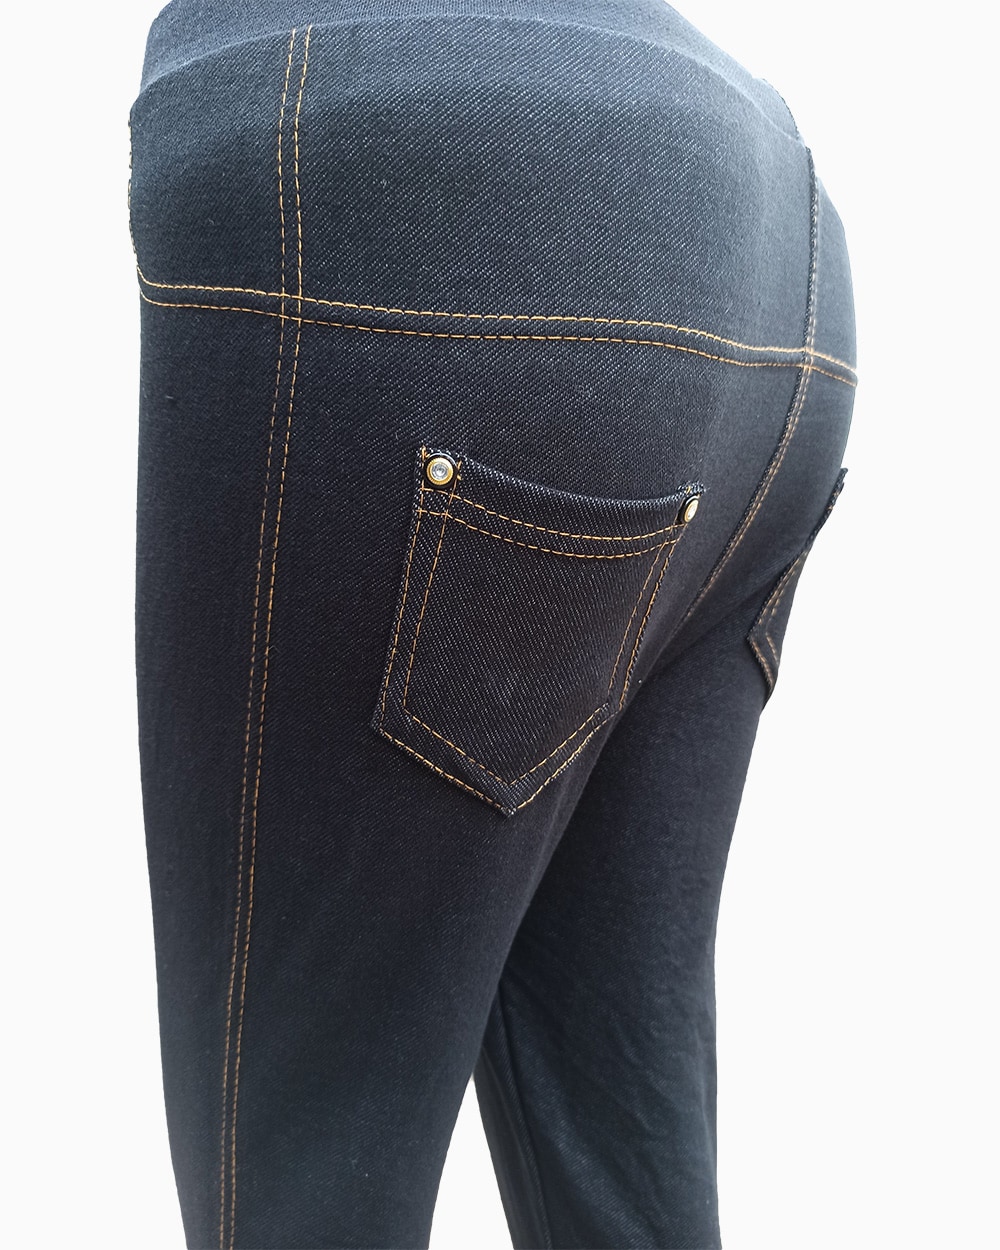 female denim pants-back 2 pockets-stretchable denim pants (8)-black pants